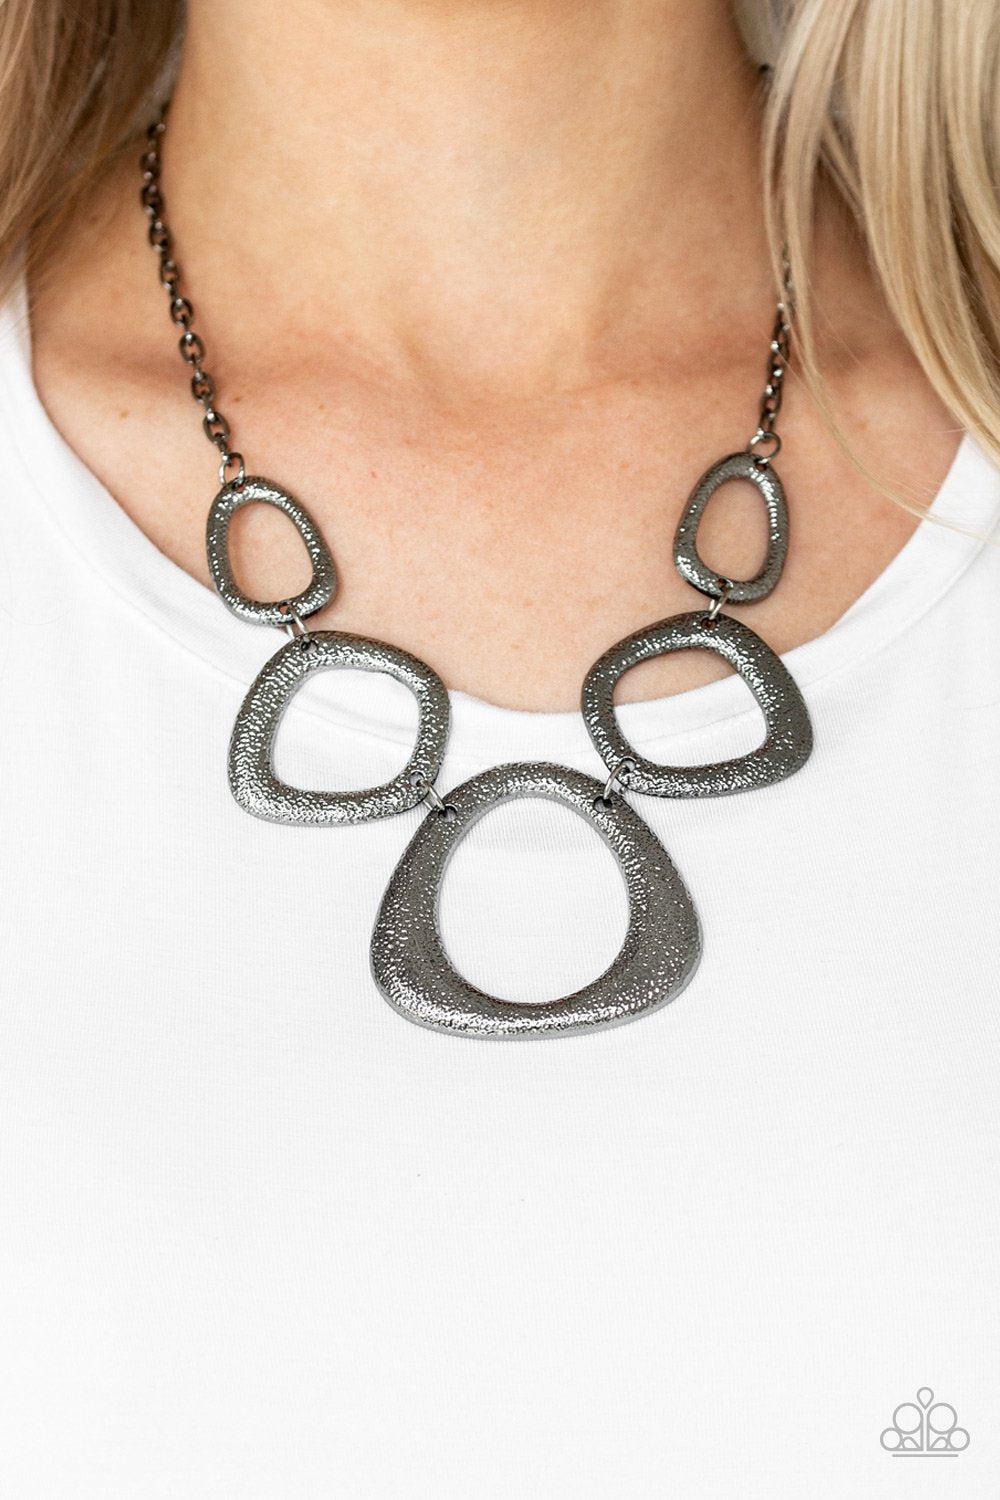 Backstreet Bandit Black Gunmetal Necklace - Paparazzi Accessories-CarasShop.com - $5 Jewelry by Cara Jewels